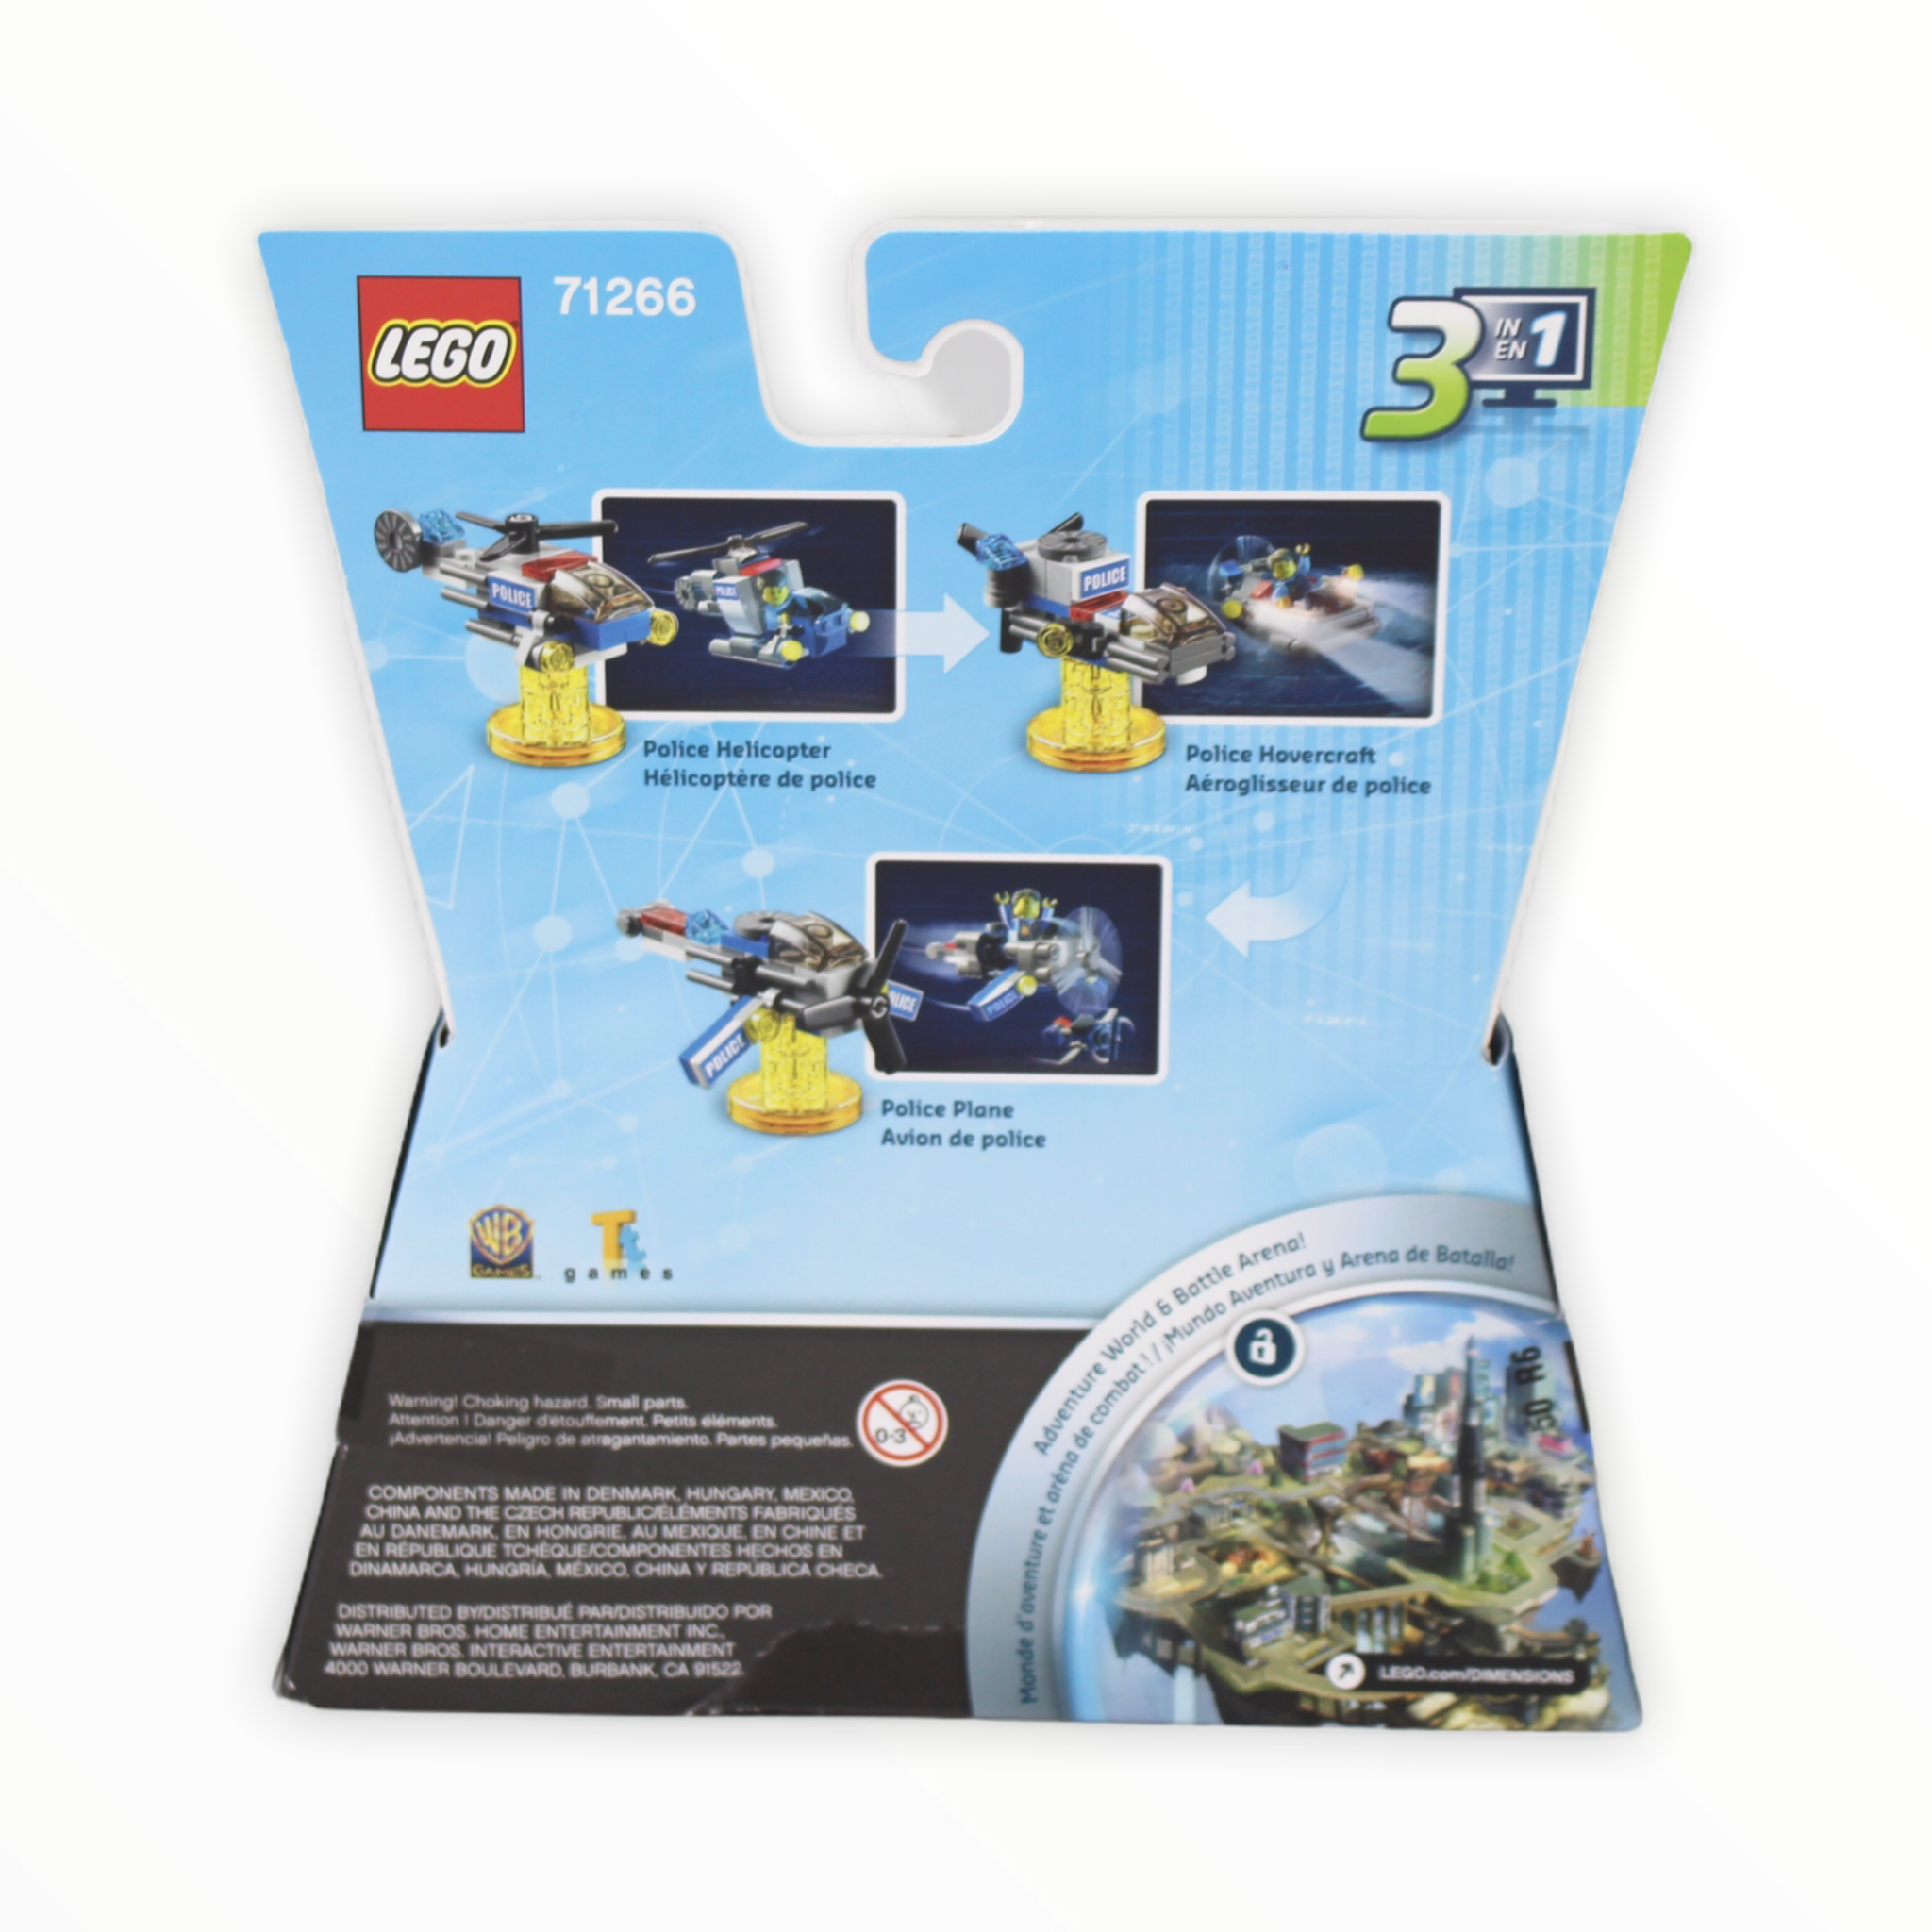 Inspector Gadget Lego Dimensions Team Pack